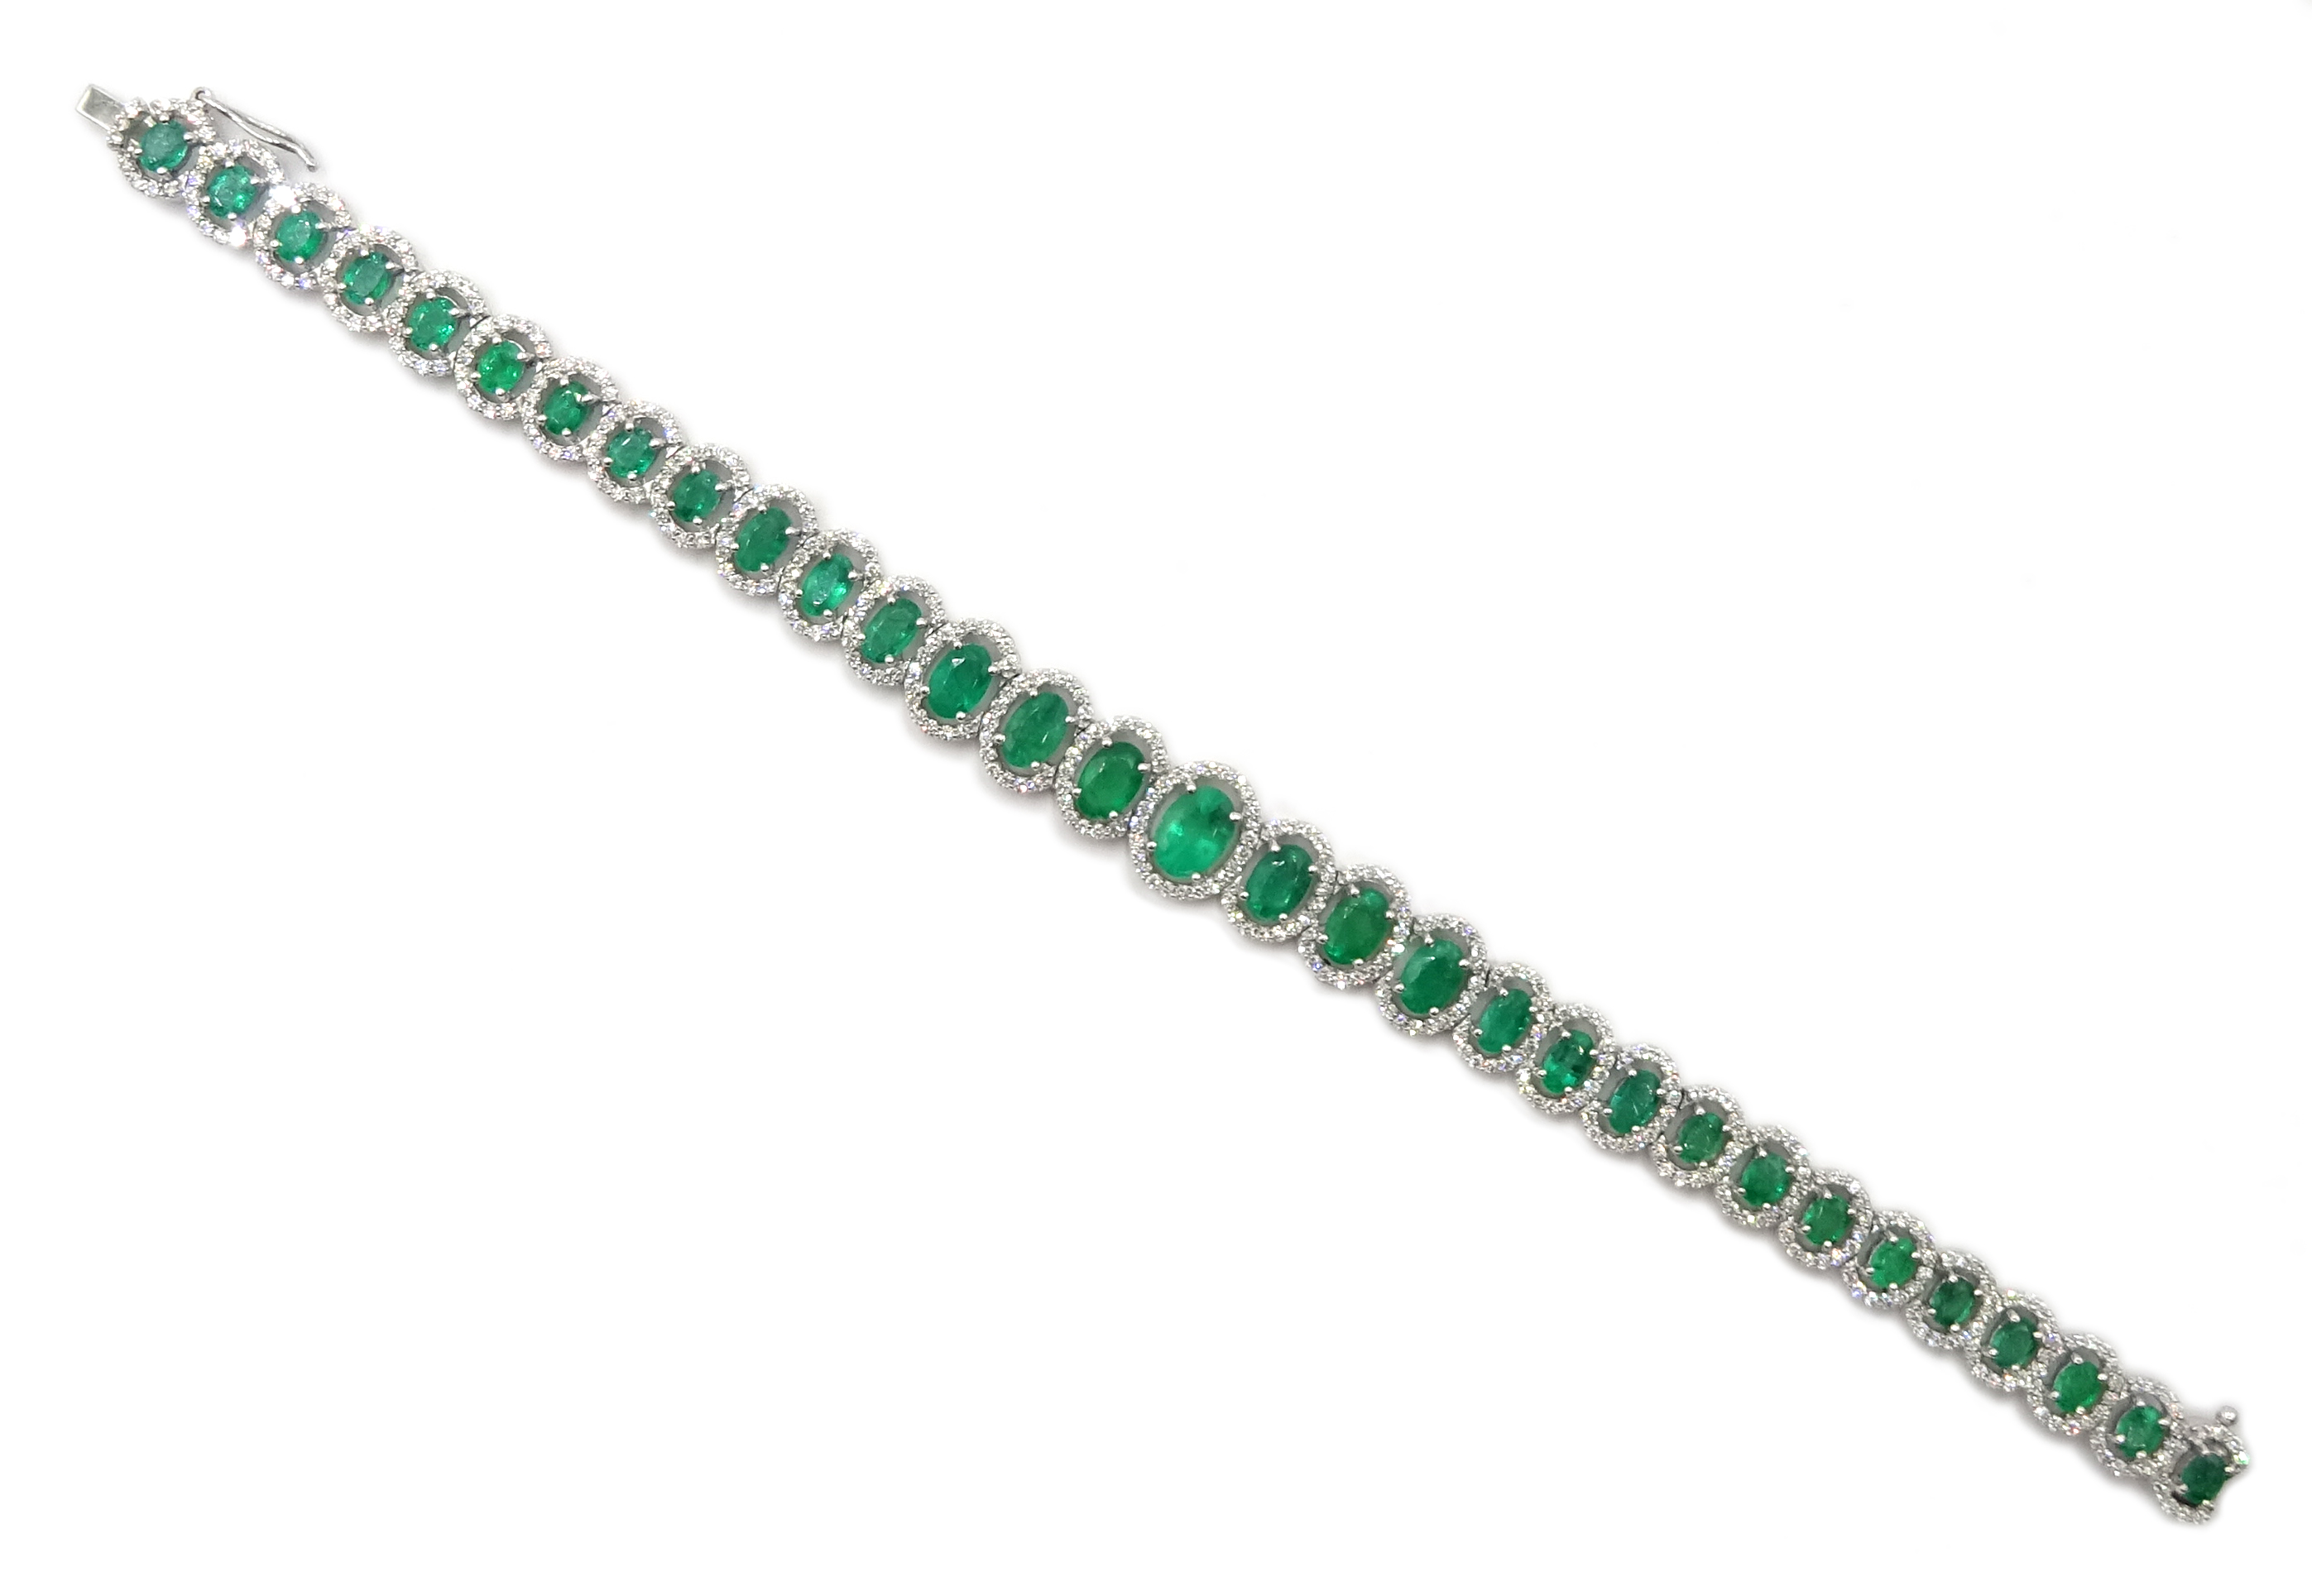 18ct gold graduating oval emerald bracelet - Image 3 of 5